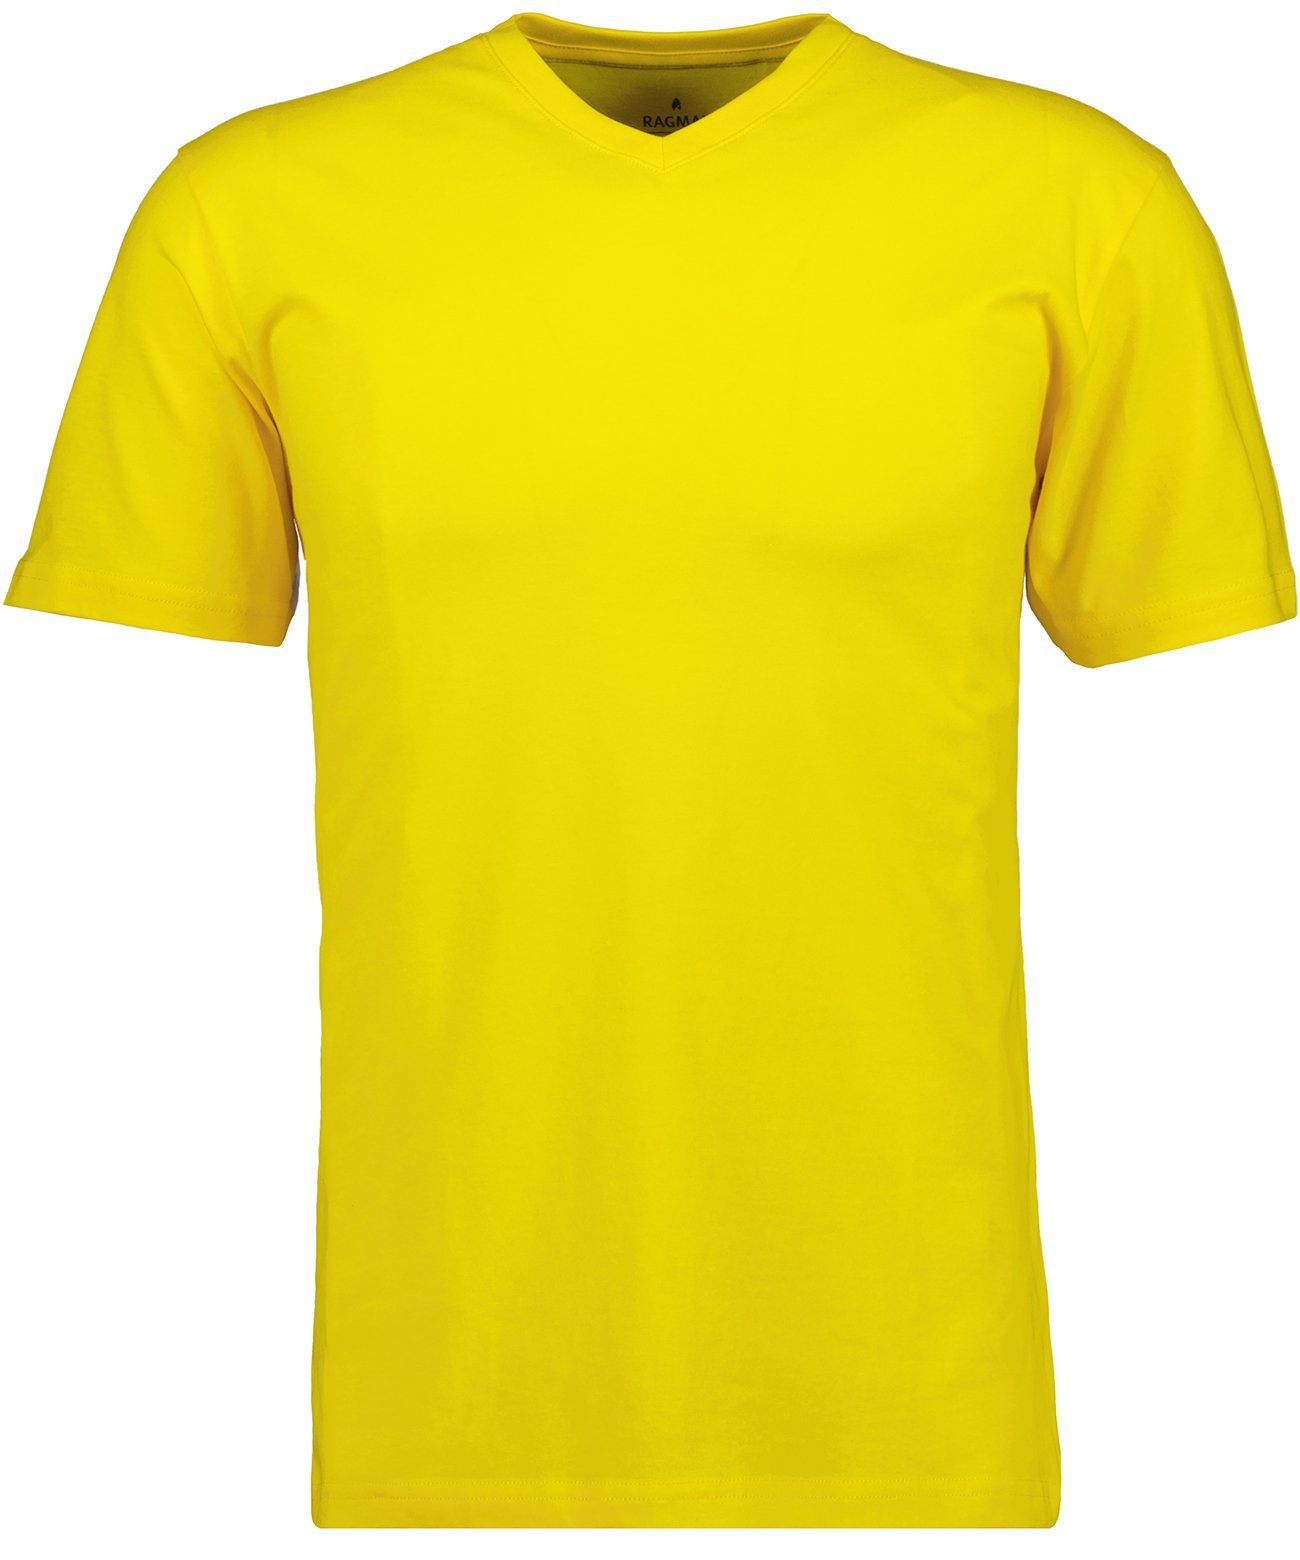 RAGMAN T-Shirt Limone-502